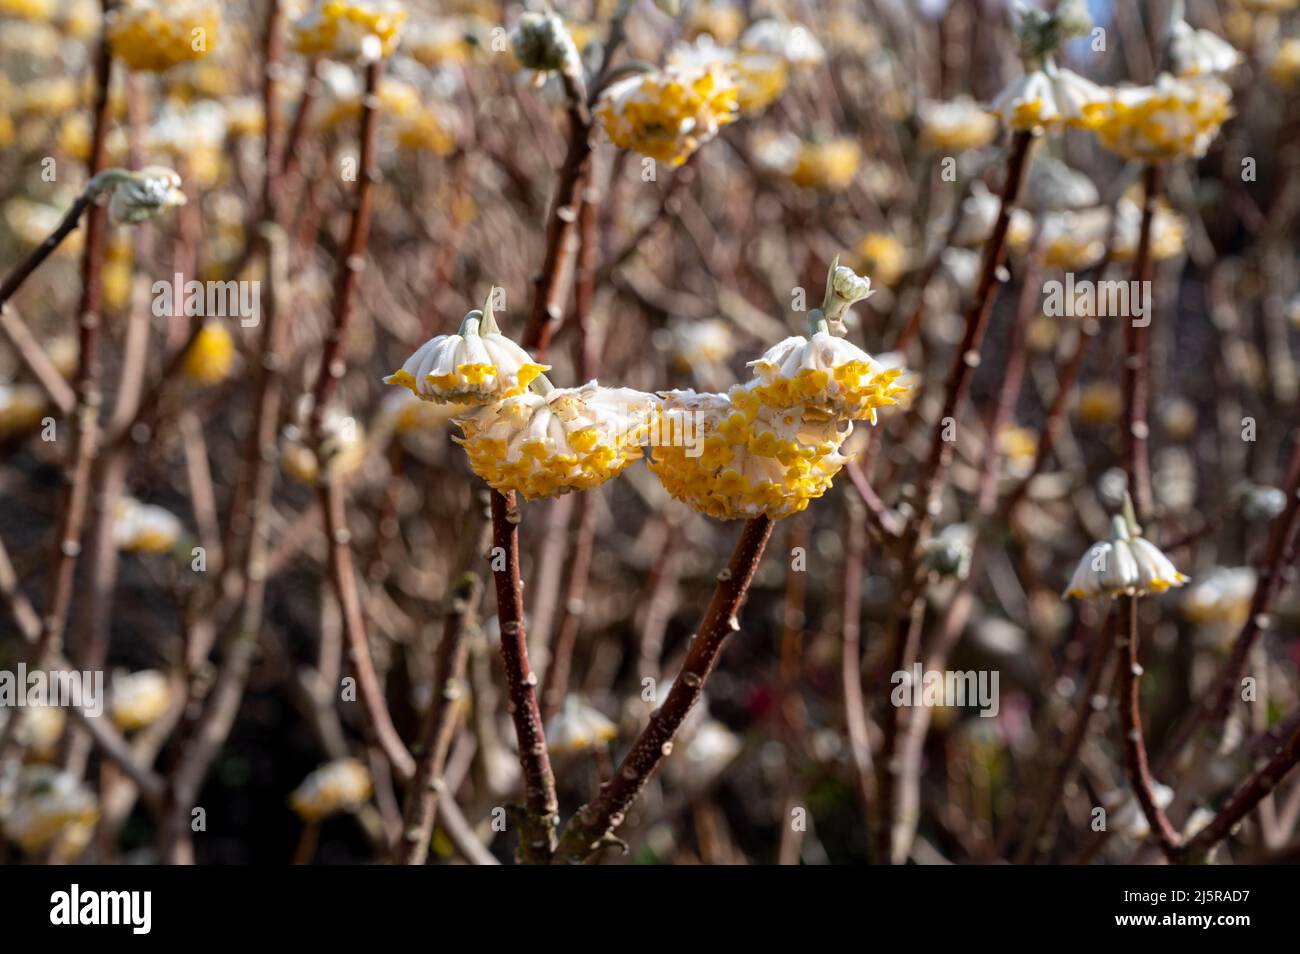 Edgeworthia chrysantha grandiflora, Paperbush grandiflora, Edgeworthia grandiflora, Thymelaeaceae. Flores de color crema a principios de la primavera. Foto de stock